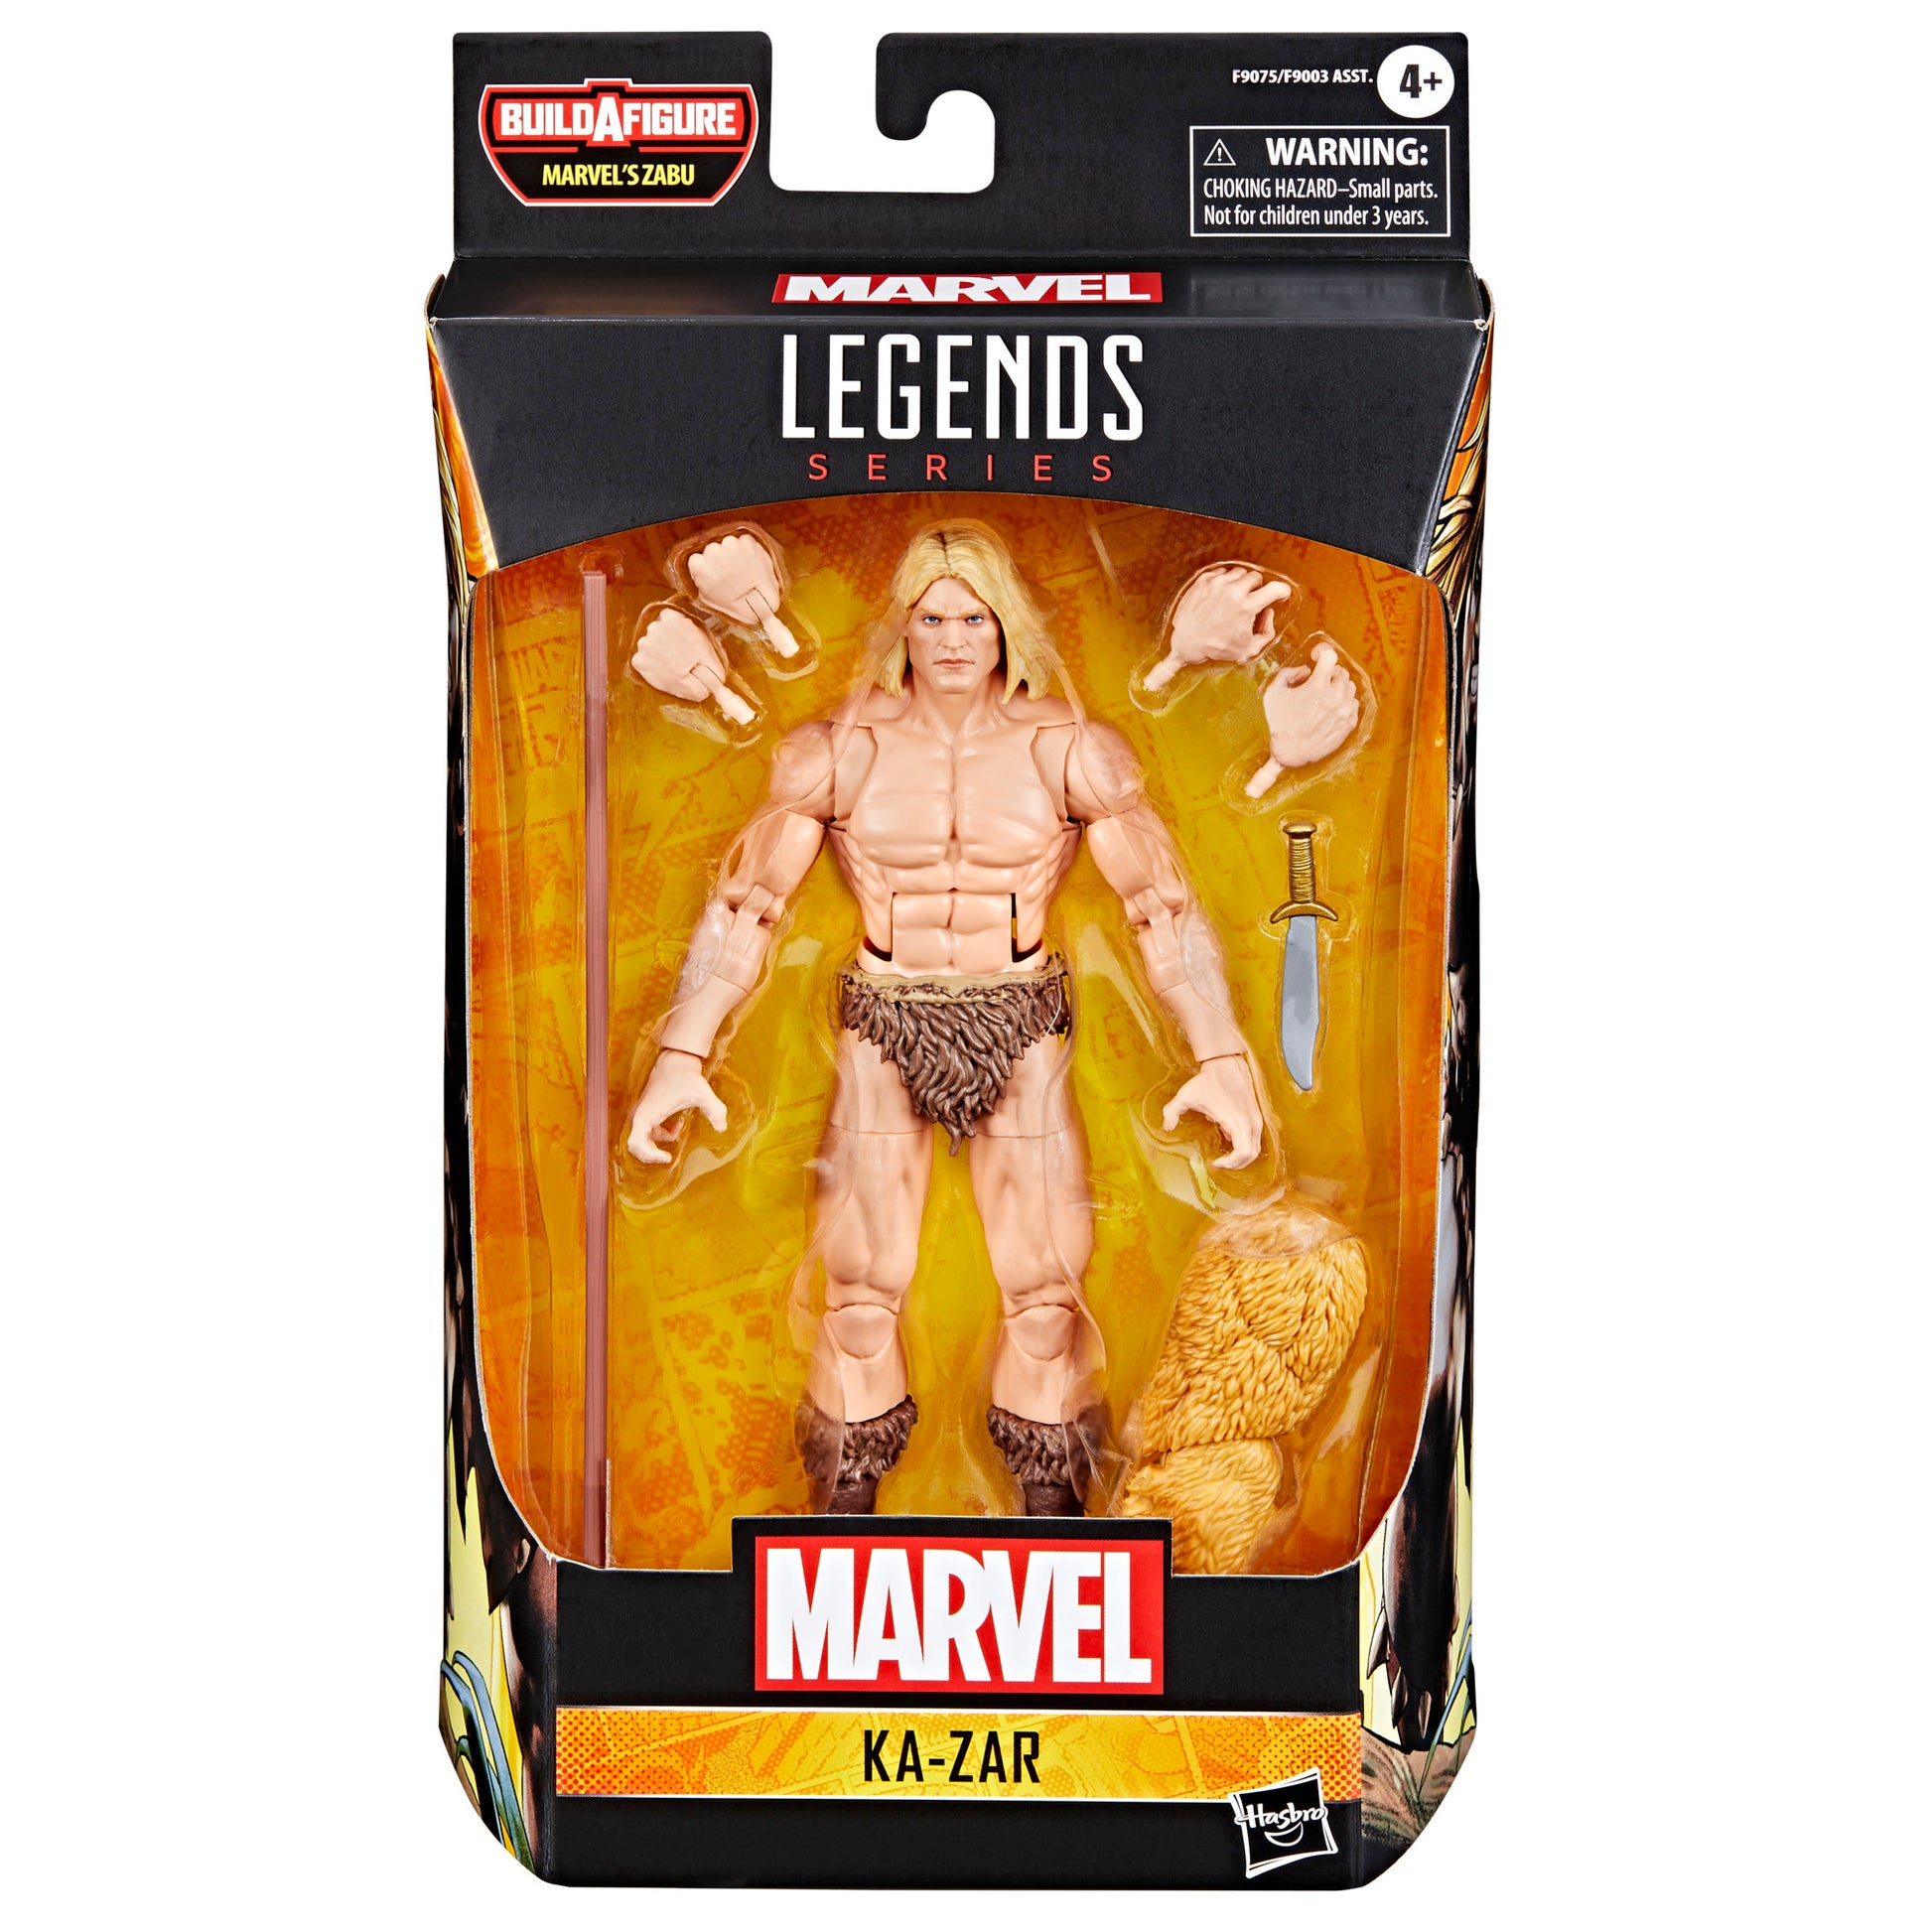 Marvel Legends Series Marvel Comics Ka-Zar Action Figure Toy